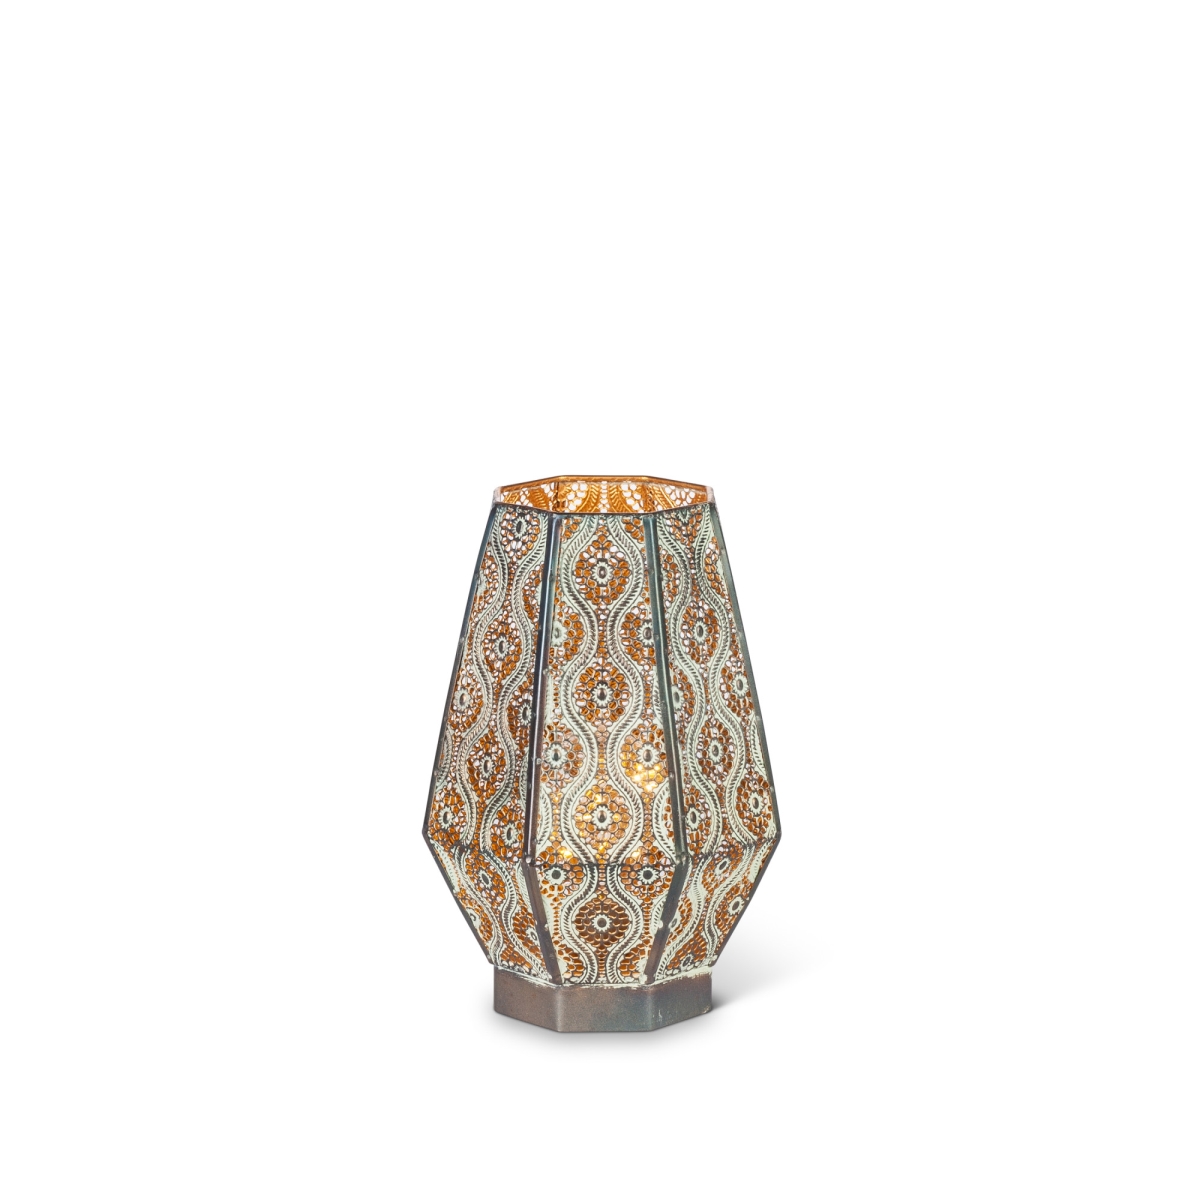 Gerson 44620ec 11 In. Antique Pattern Lantern With Gold Interior & 15 Led Light String, Timer - Multi Color - Set Of 2